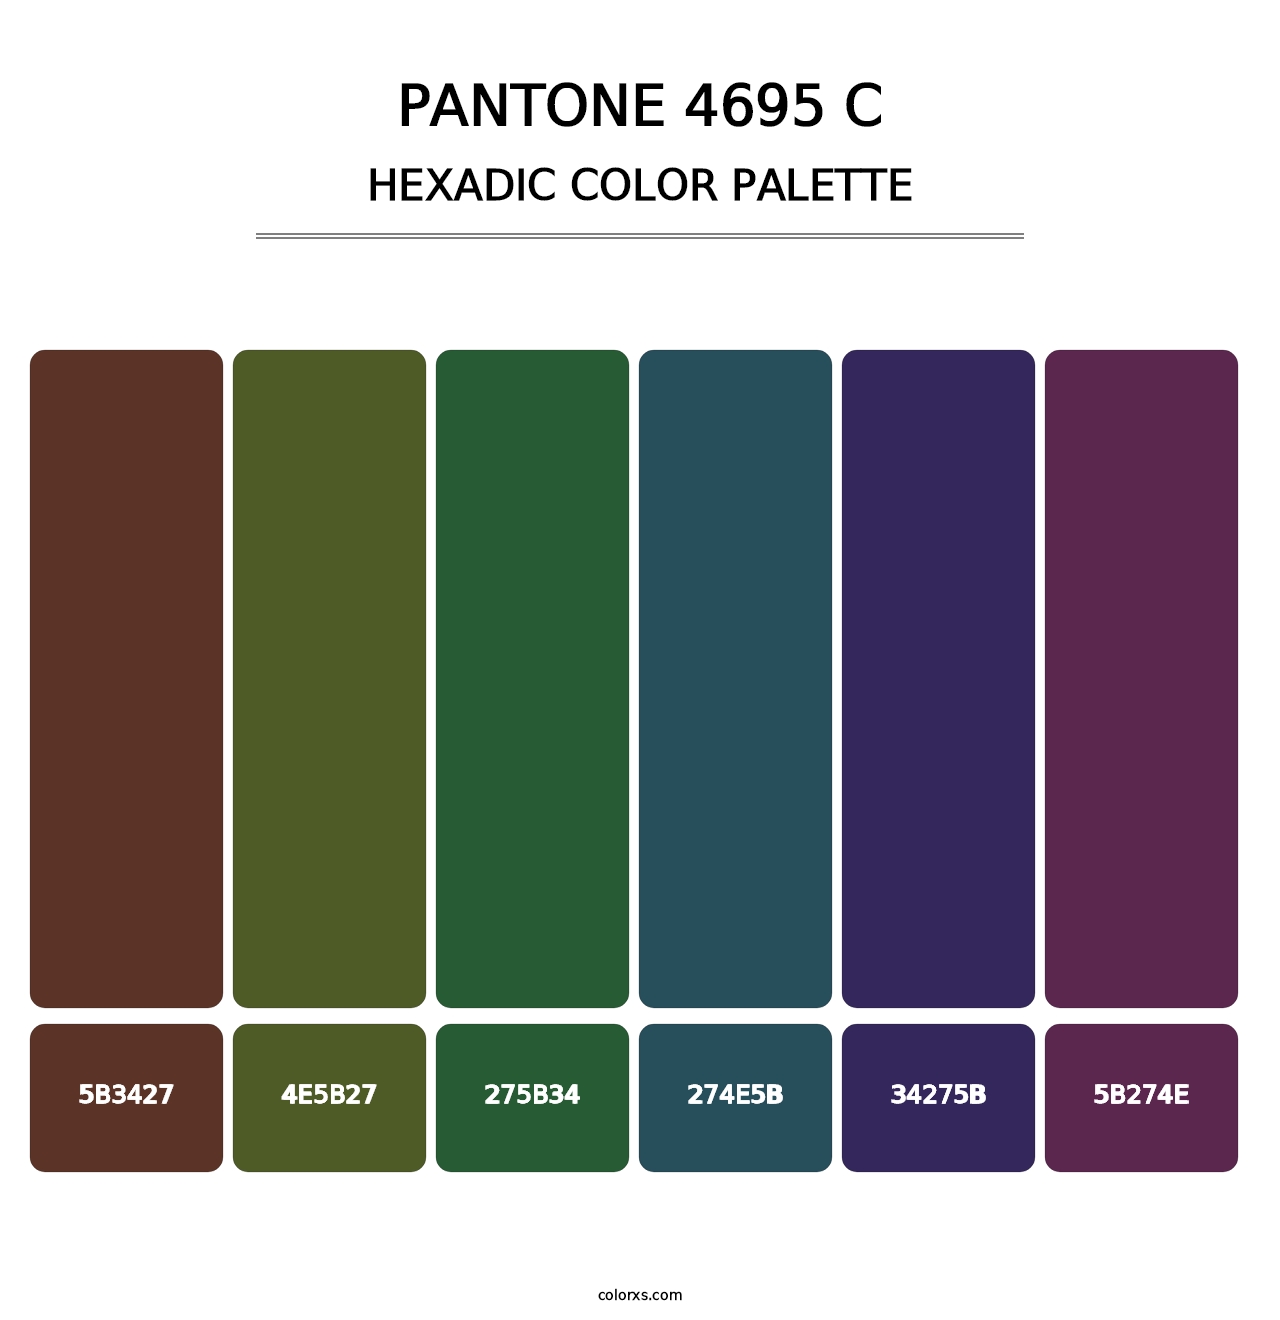 PANTONE 4695 C - Hexadic Color Palette